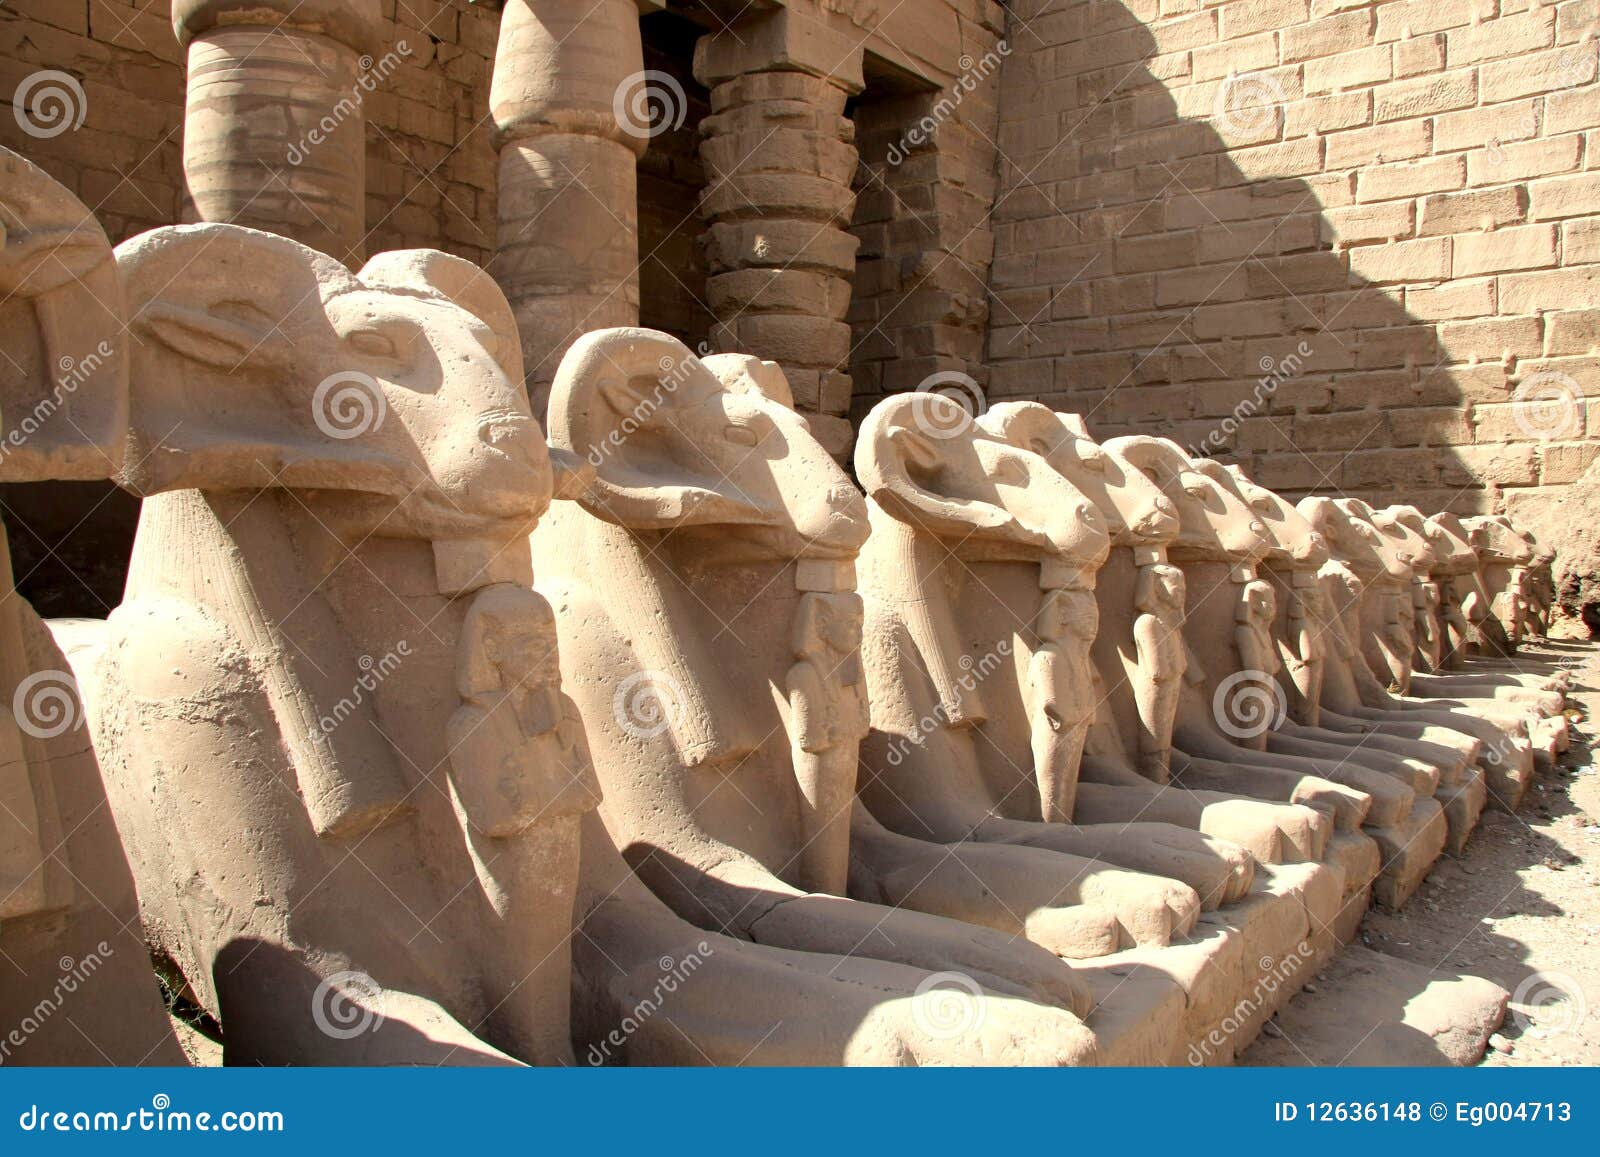 statues in karnak temple